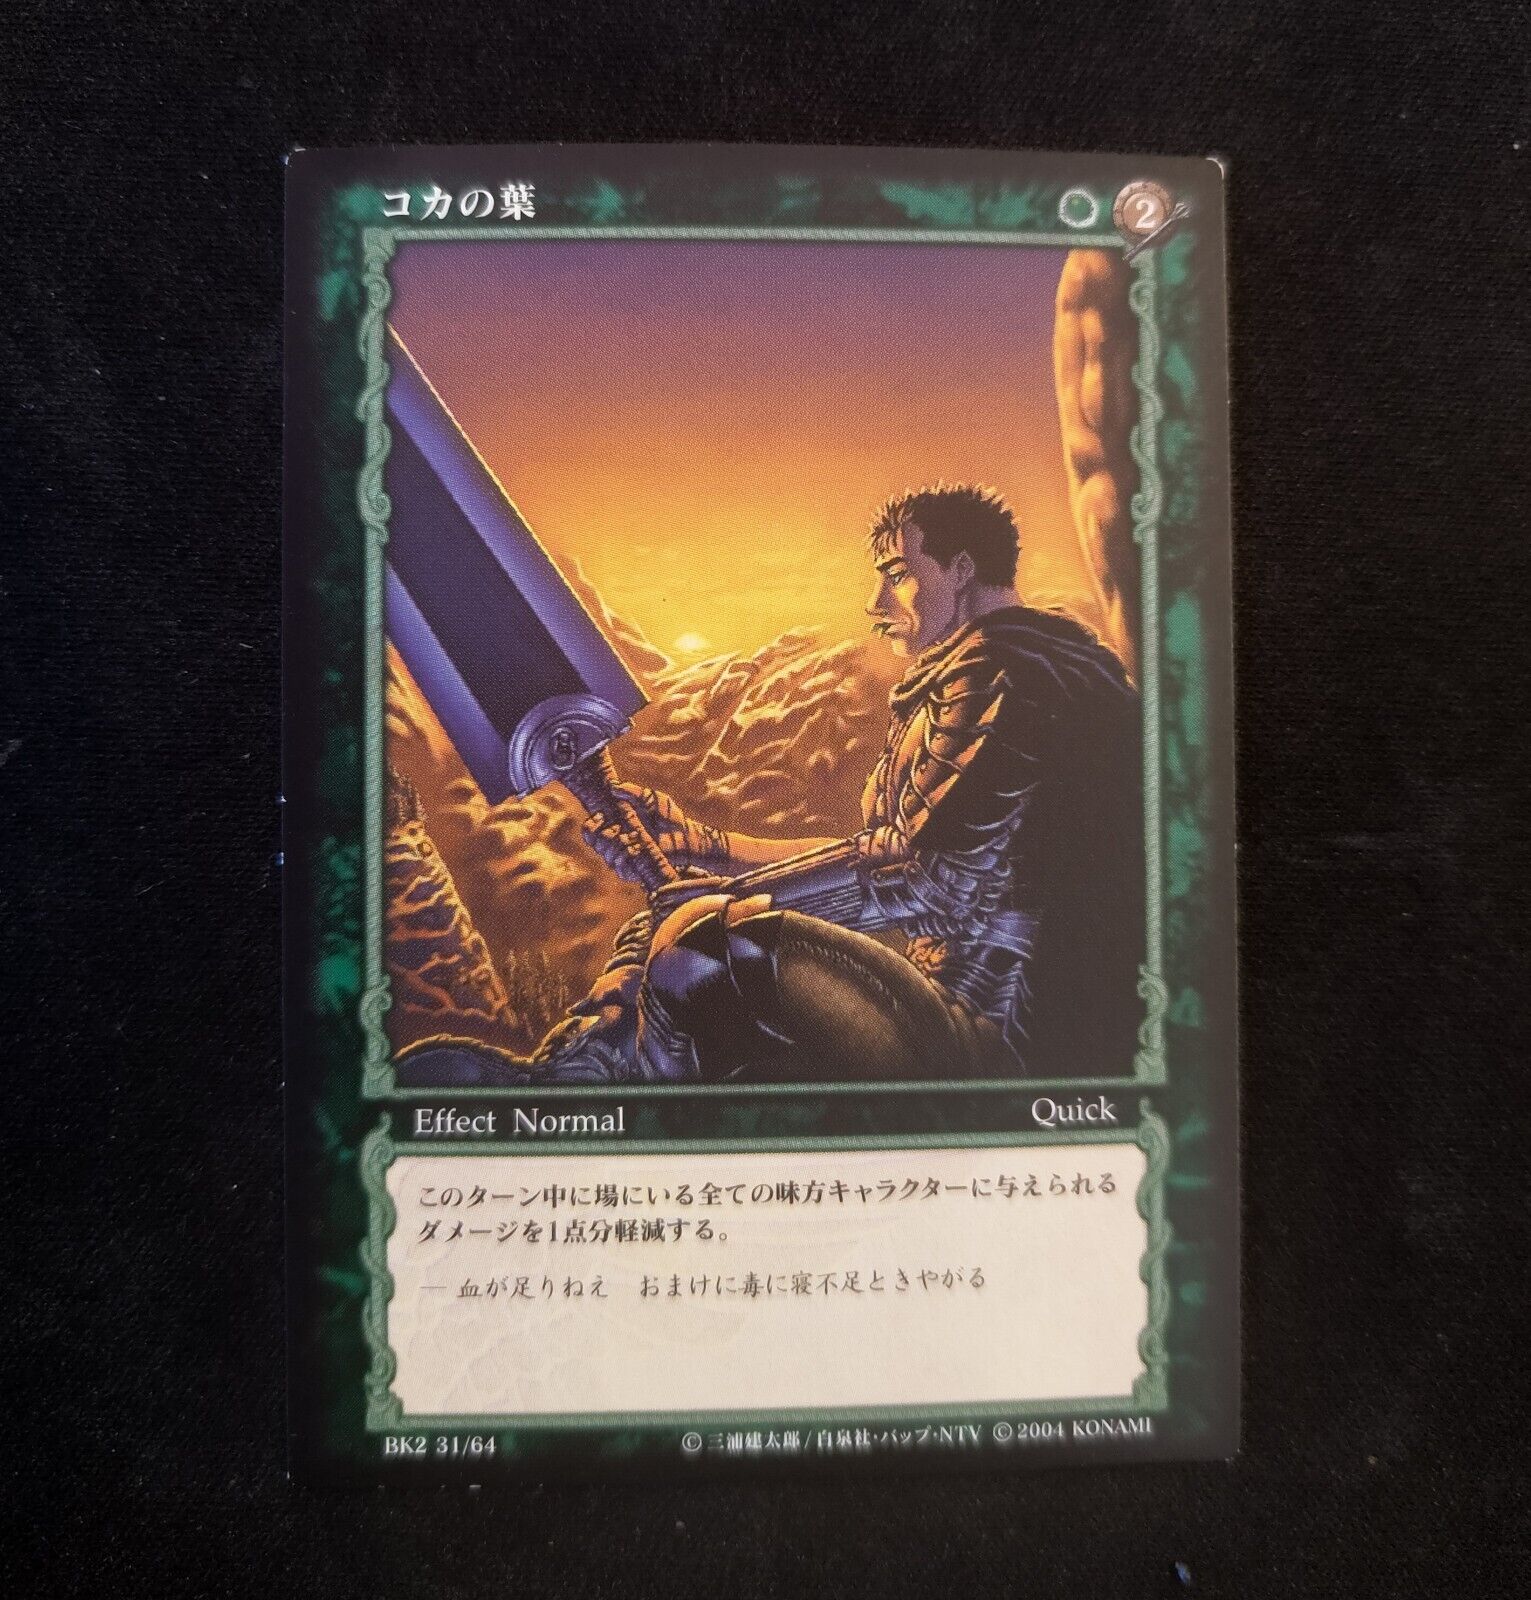 BK2 31/64 Berserk Guts TCG Card Game Japanese import